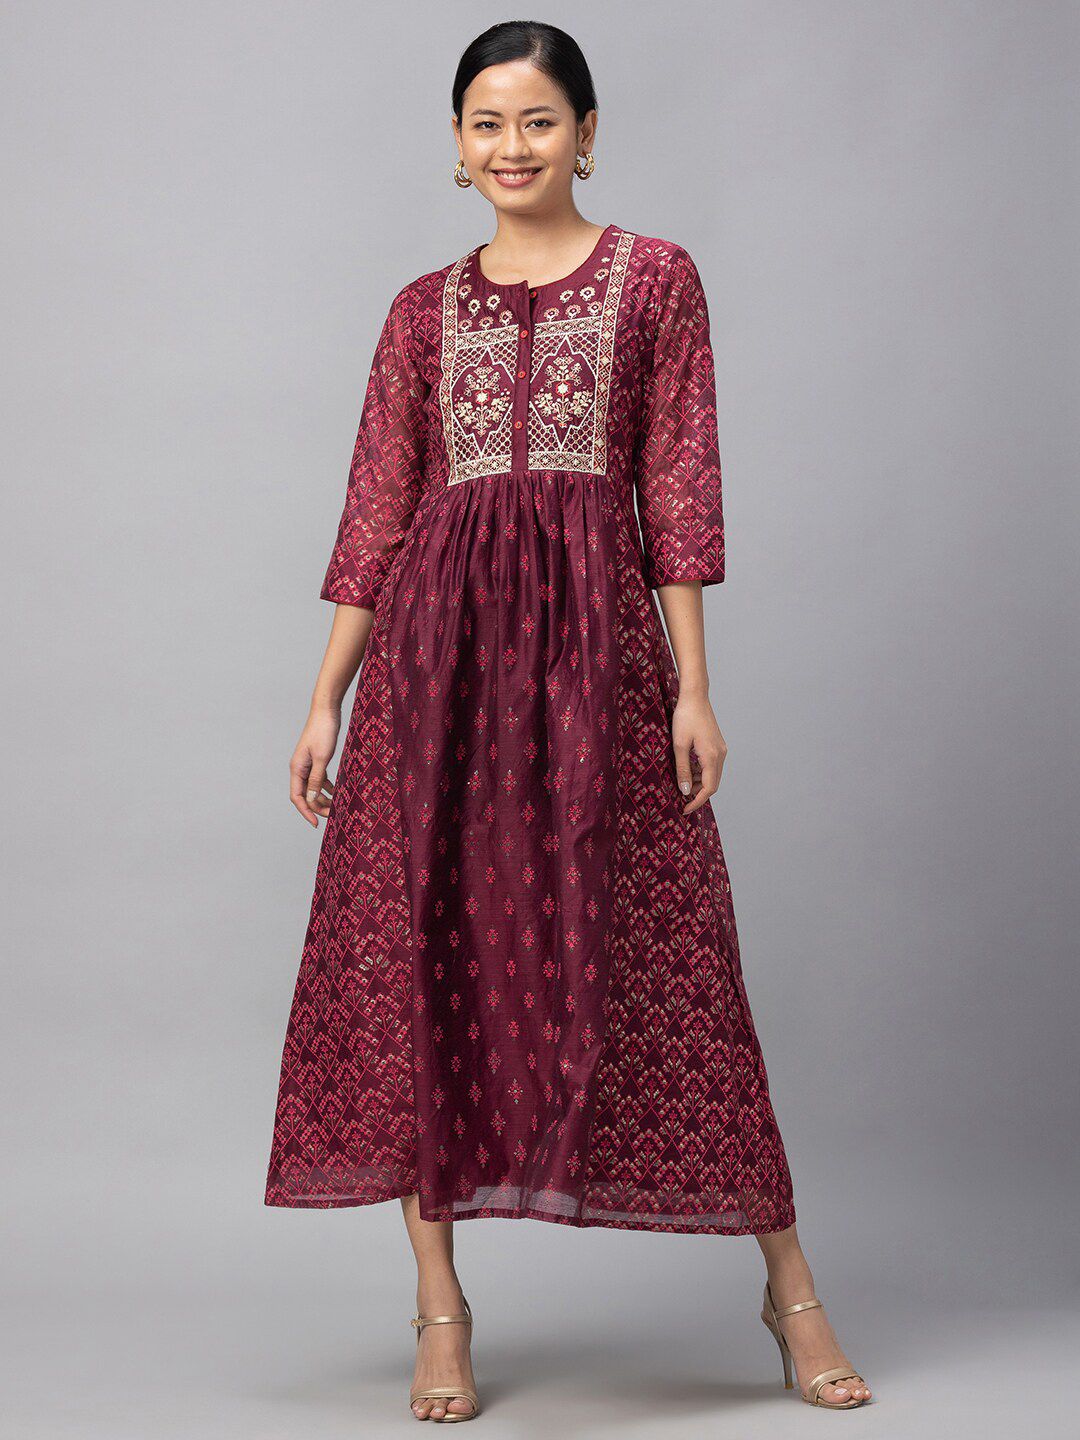 Globus Burgundy Ethnic Motifs Ethnic Maxi Dress Price in India